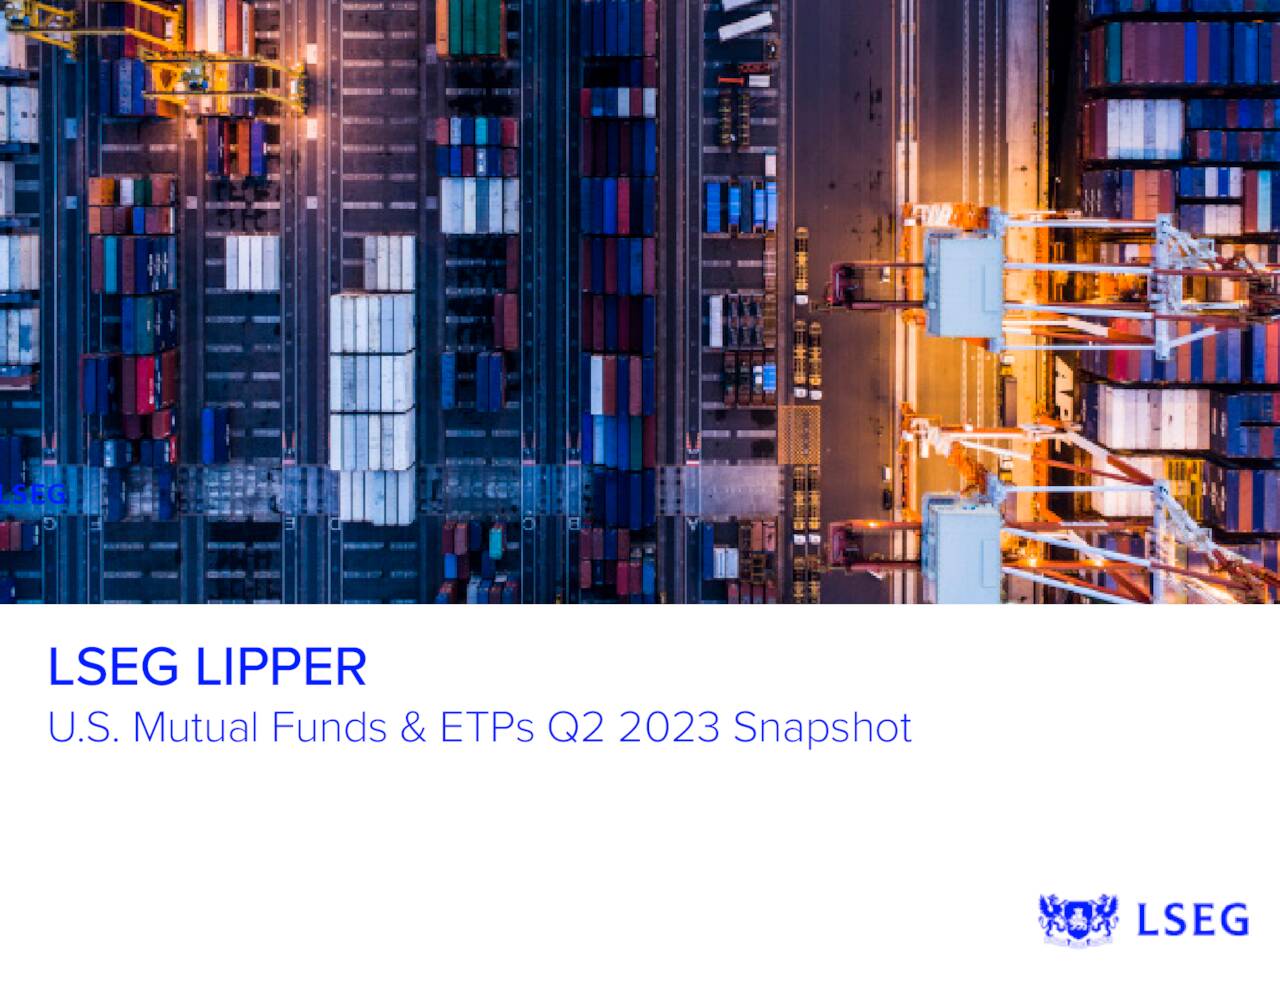 LSEG Lipper U.S. Mutual Funds & ETPs Q2 2023 Snapshot | Seeking Alpha